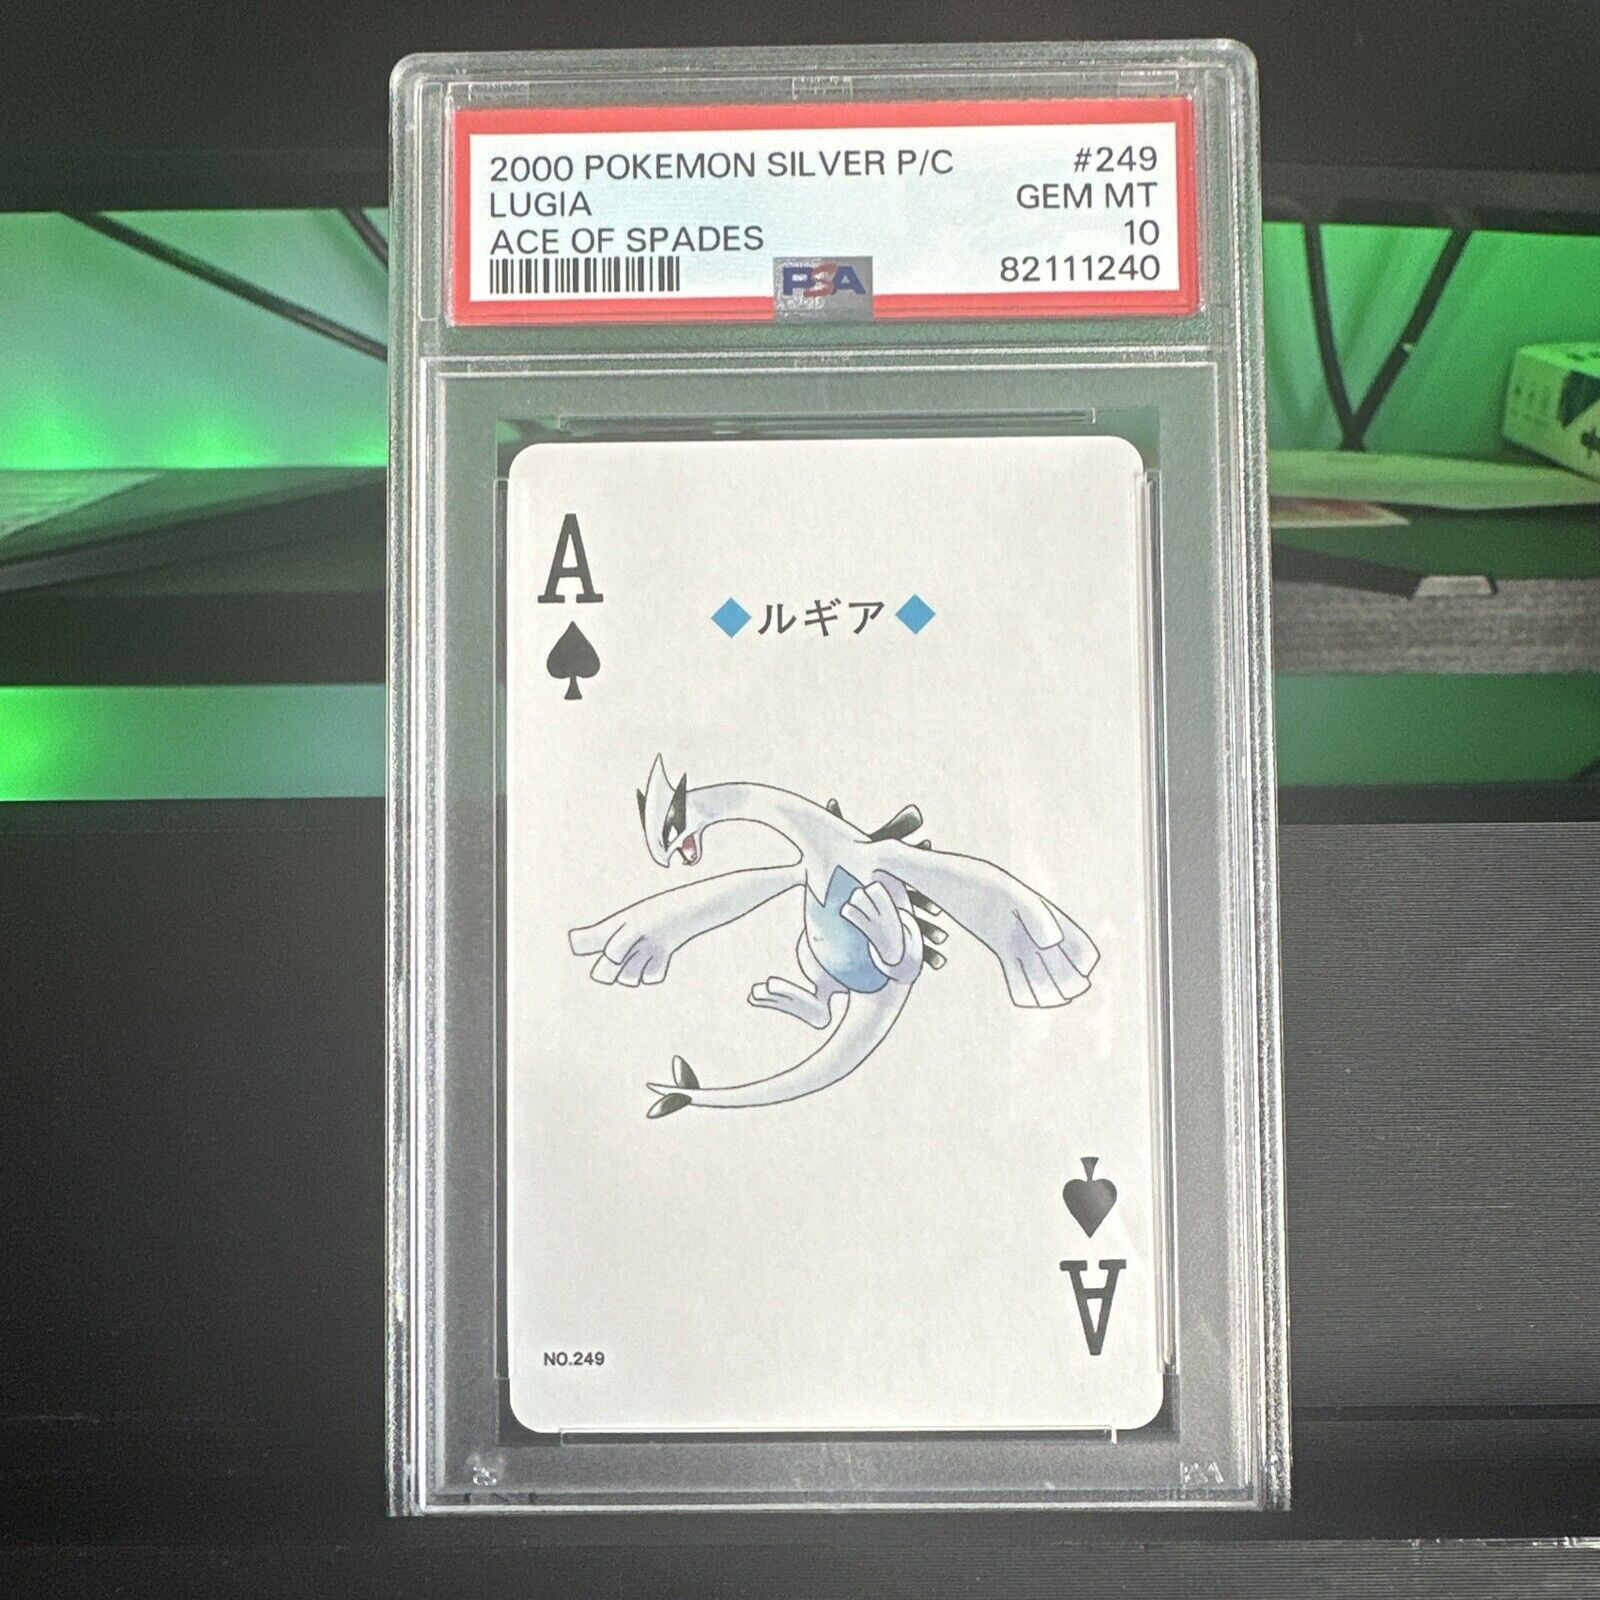 Lugia PSA 10 Pokemon Card. Ace of Spades 2000 Silver Poker Set #249. GEM MINT.